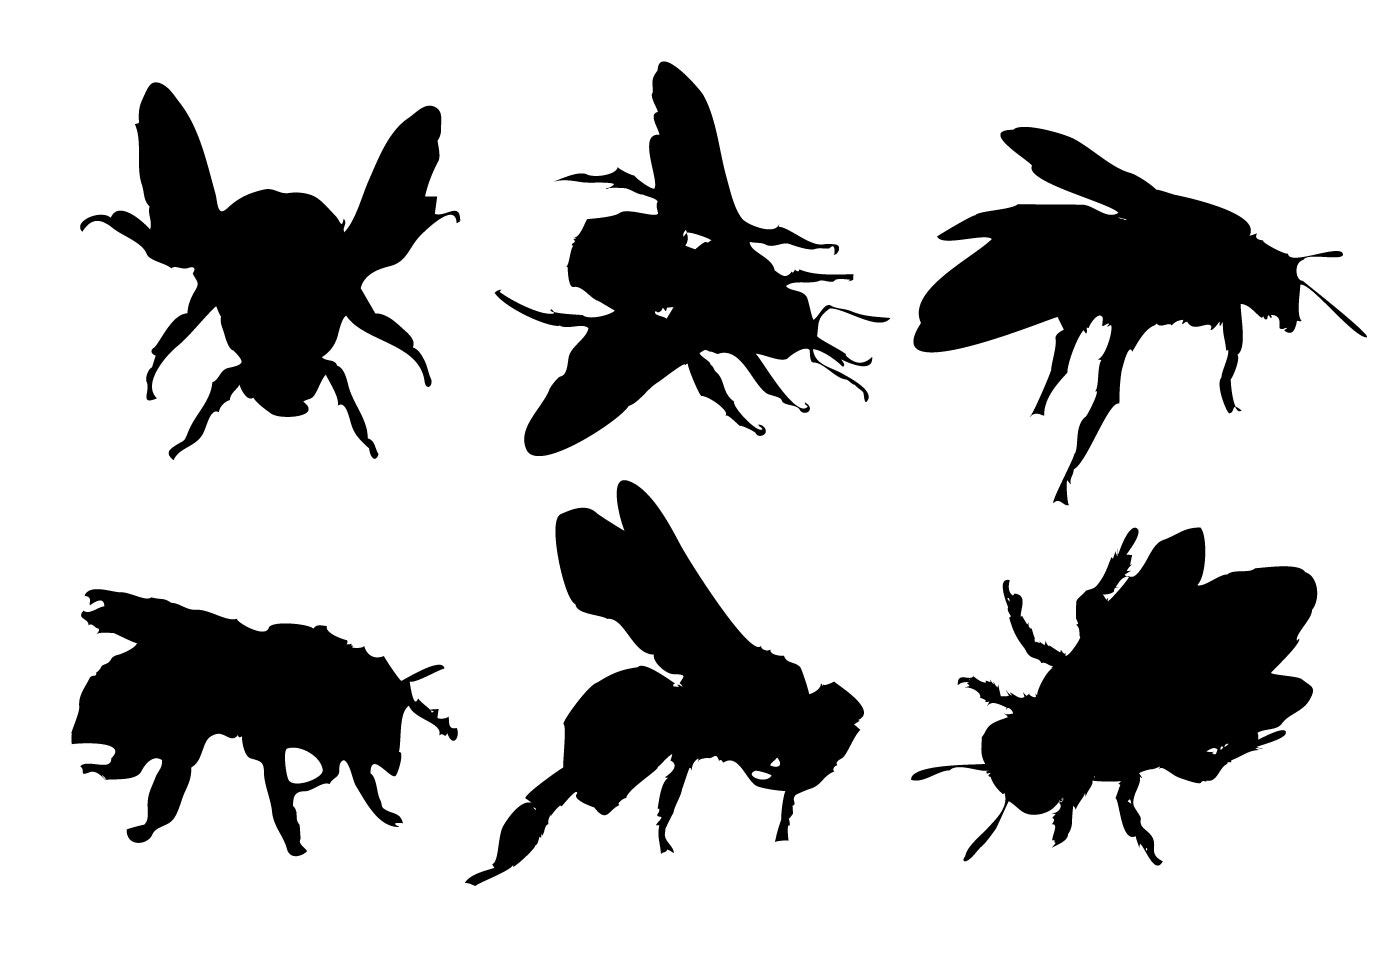 Free Bee Silhouette Vector - Download Free Vectors ...